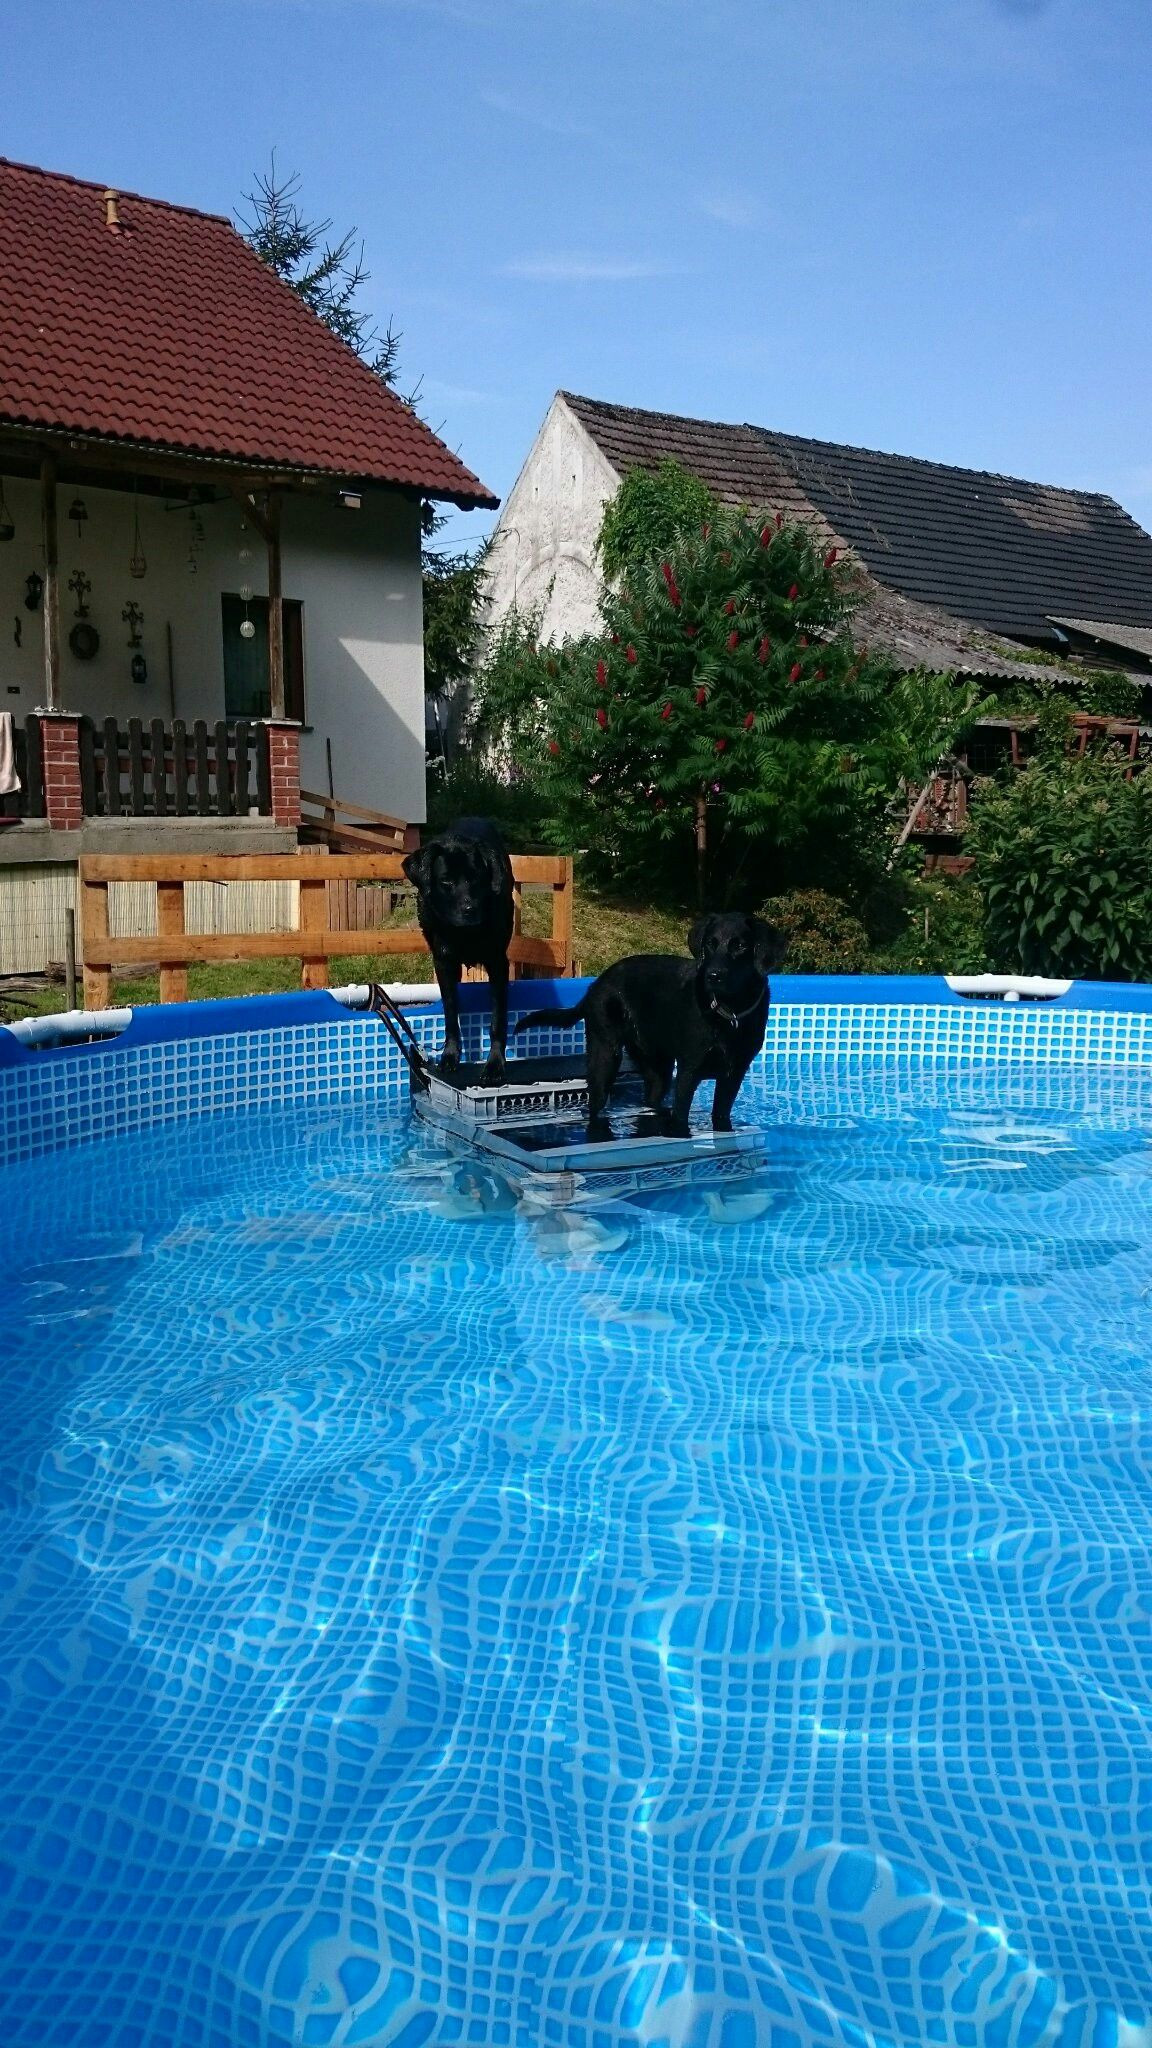 Best ideas about DIY Dog Pool Ramp
. Save or Pin DIY Swimming Pool Dog stairs Dog ramp Pool Now.